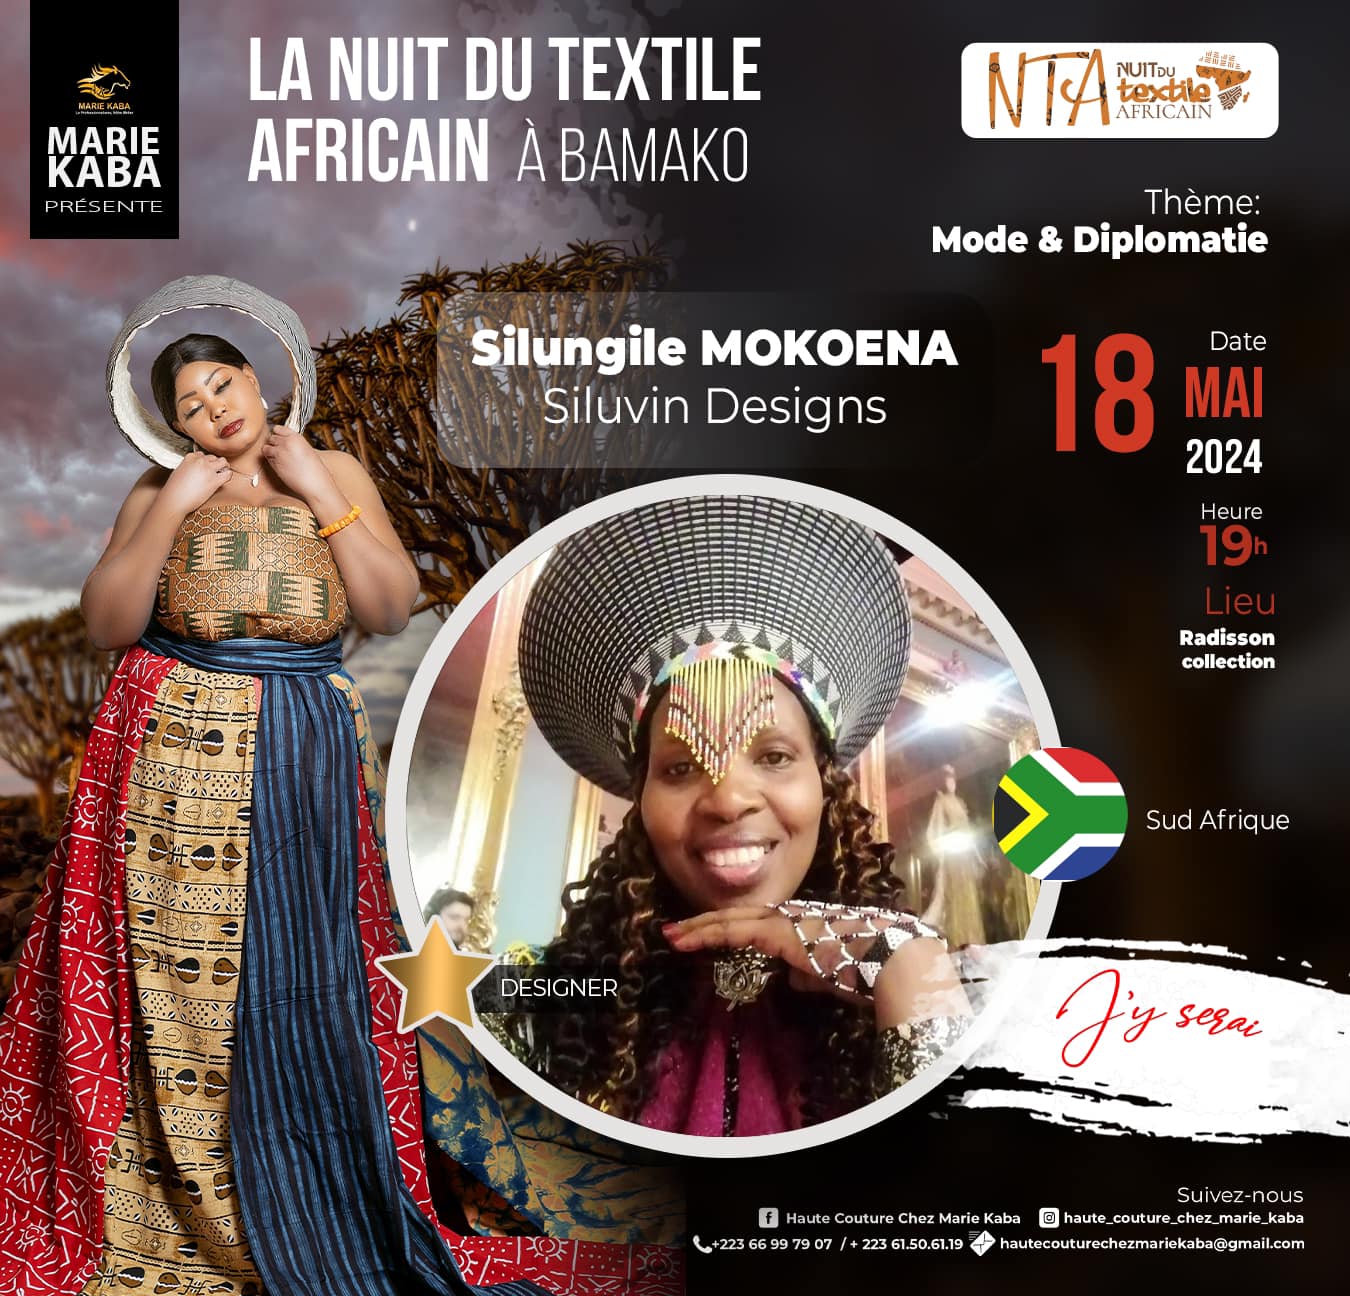 LA NUIT DU TEXTILE AFRICAIN A BAMAKO presents Silungile MOKOENA for Silungile Designs from  South Africa